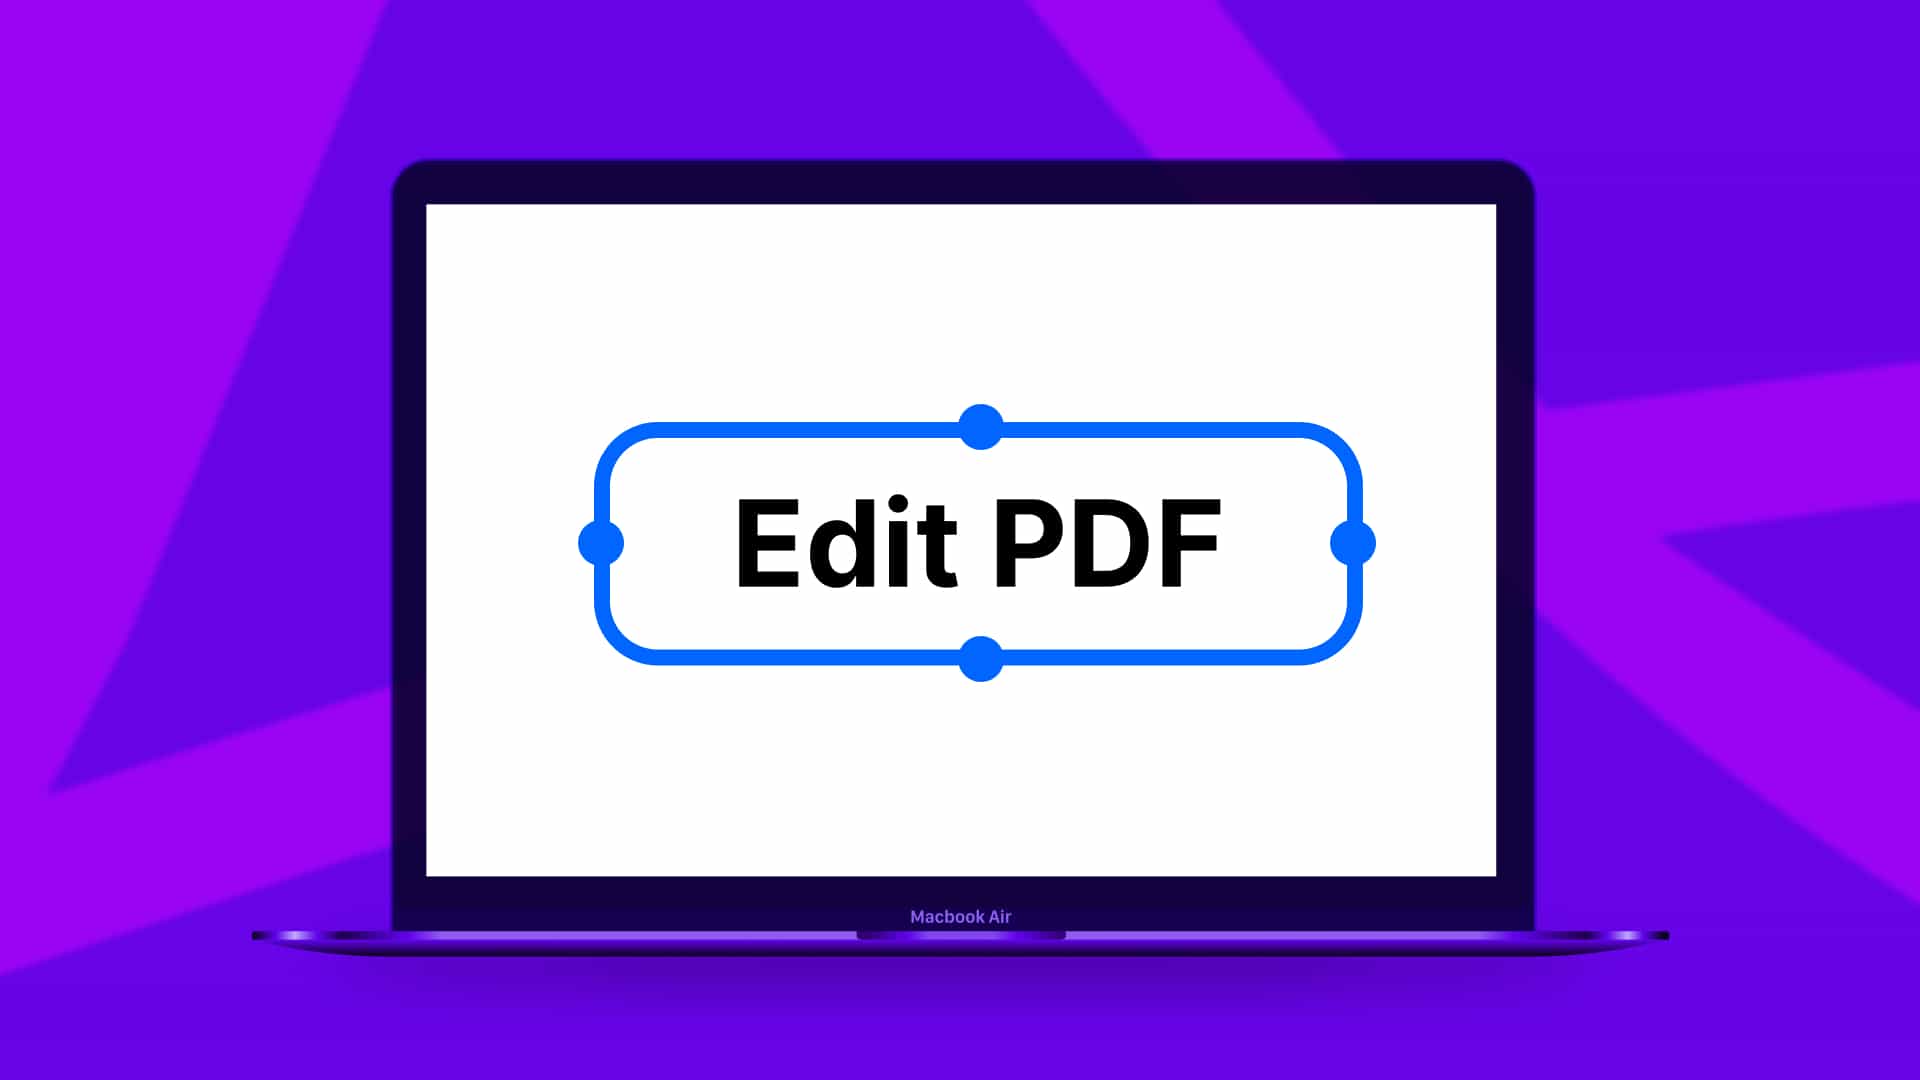 How to edit PDF on Mac